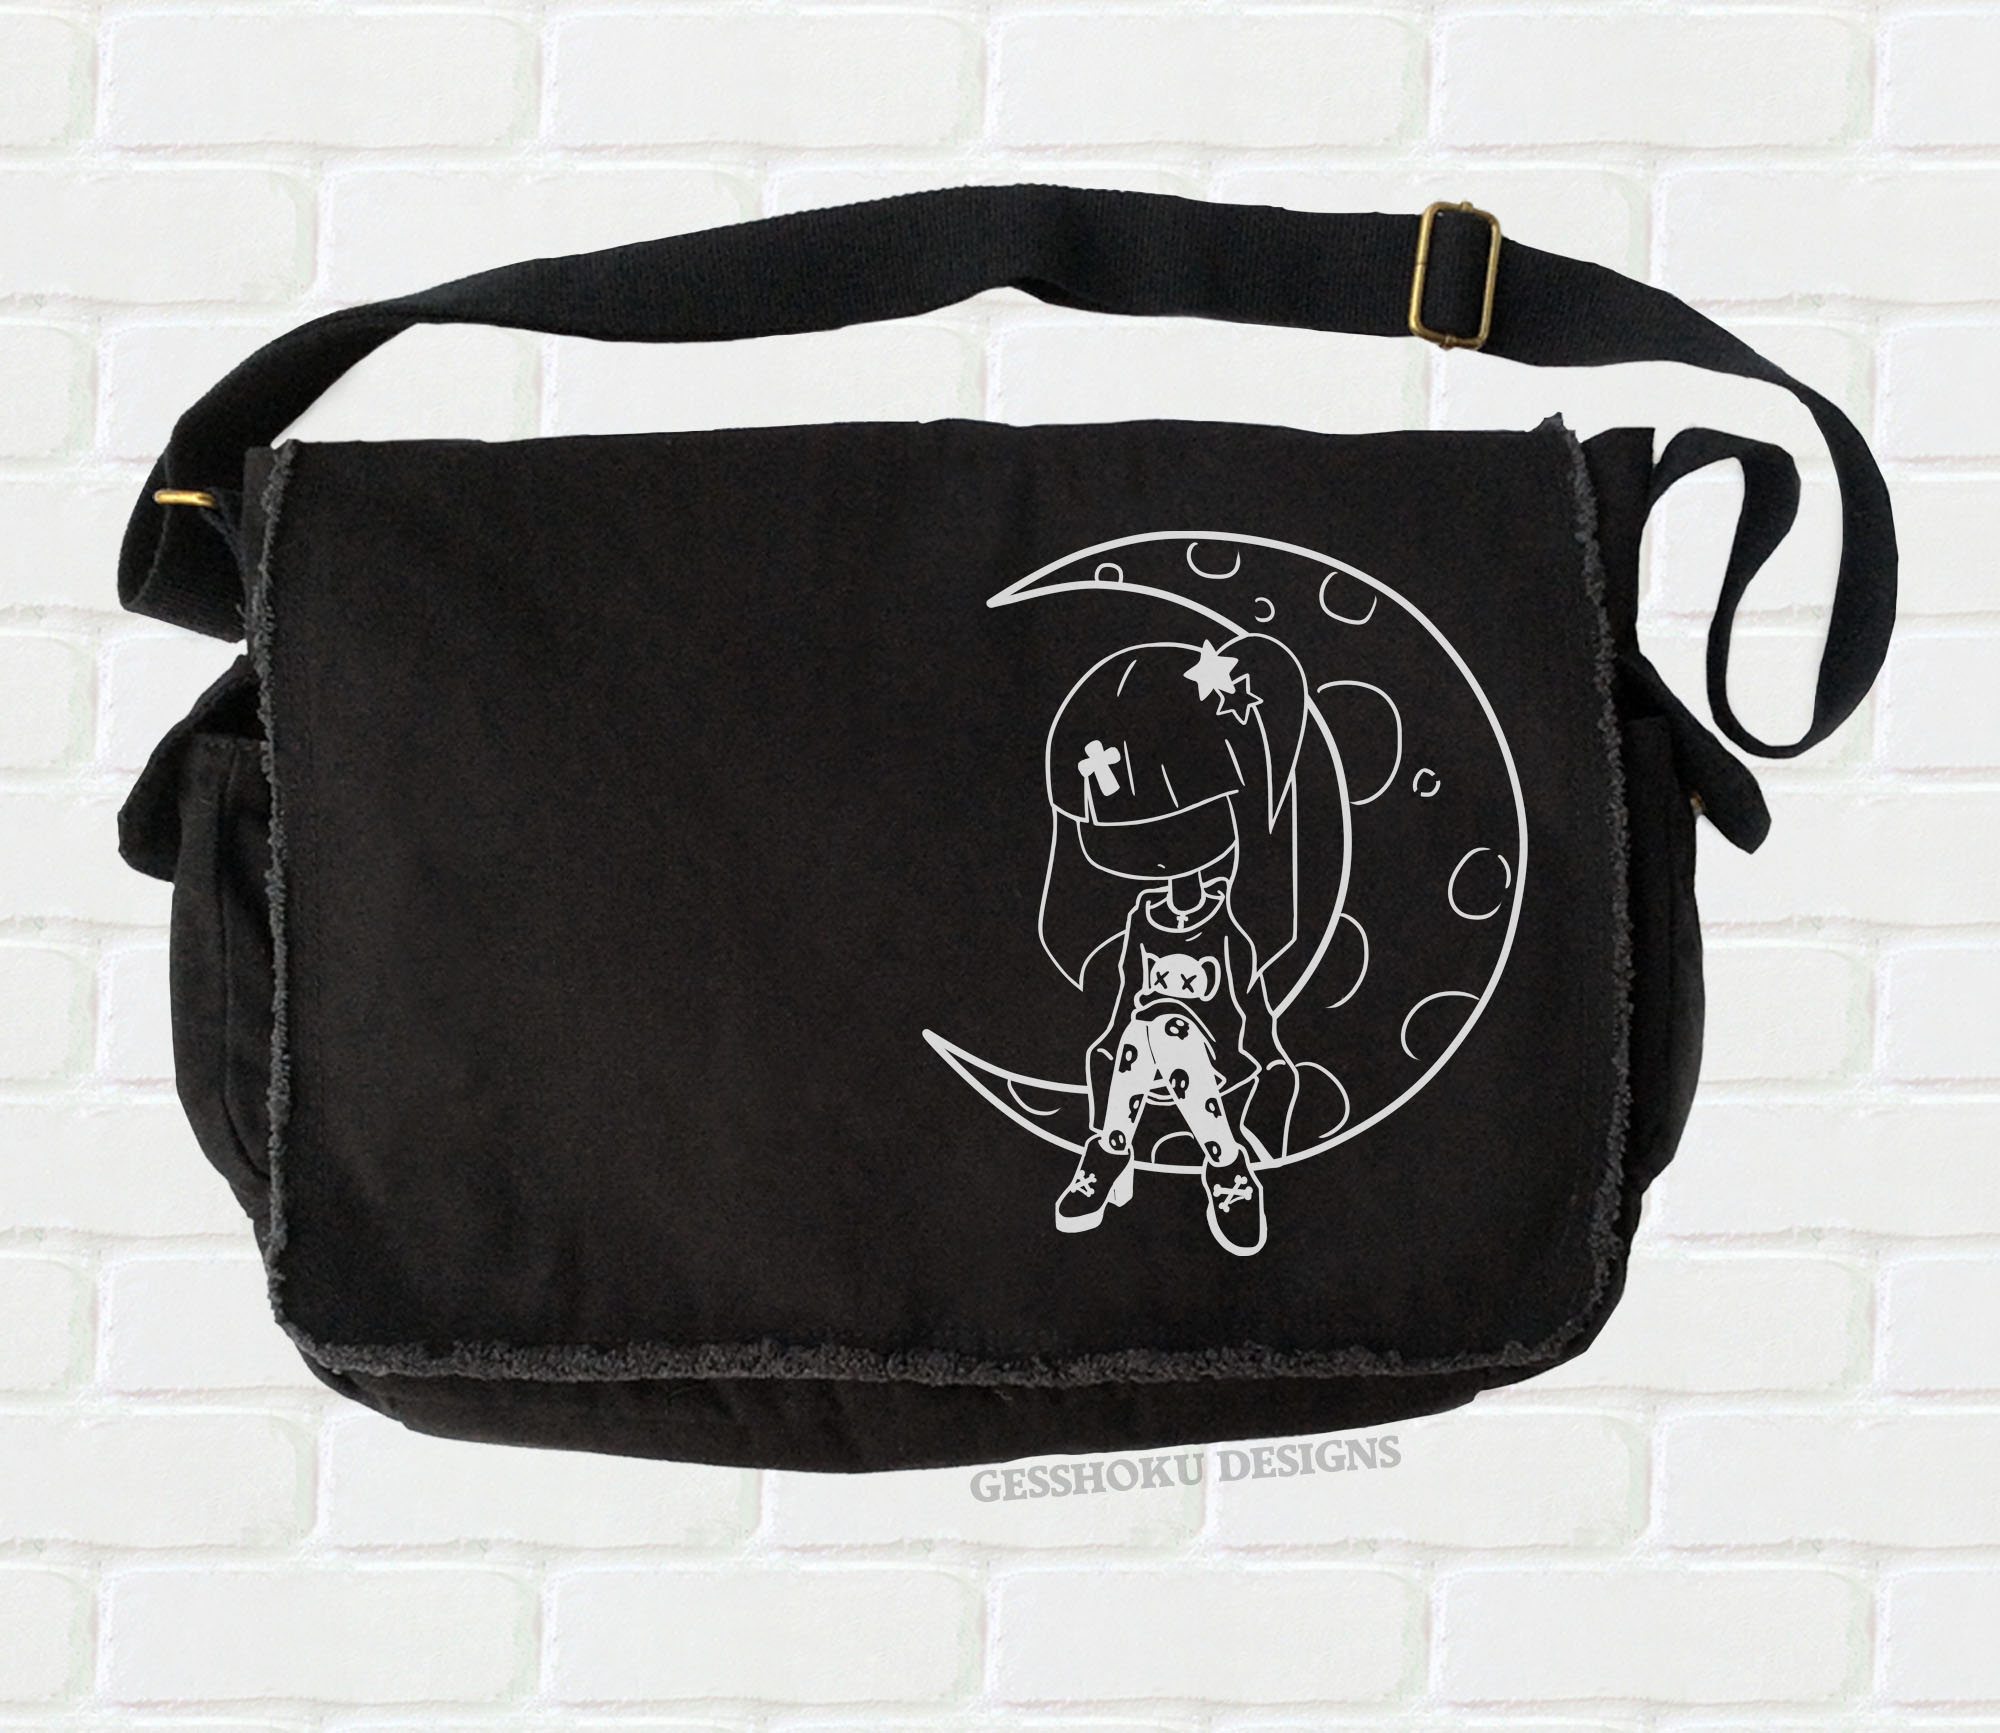 Pastel Moon Messenger Bag - Black/White